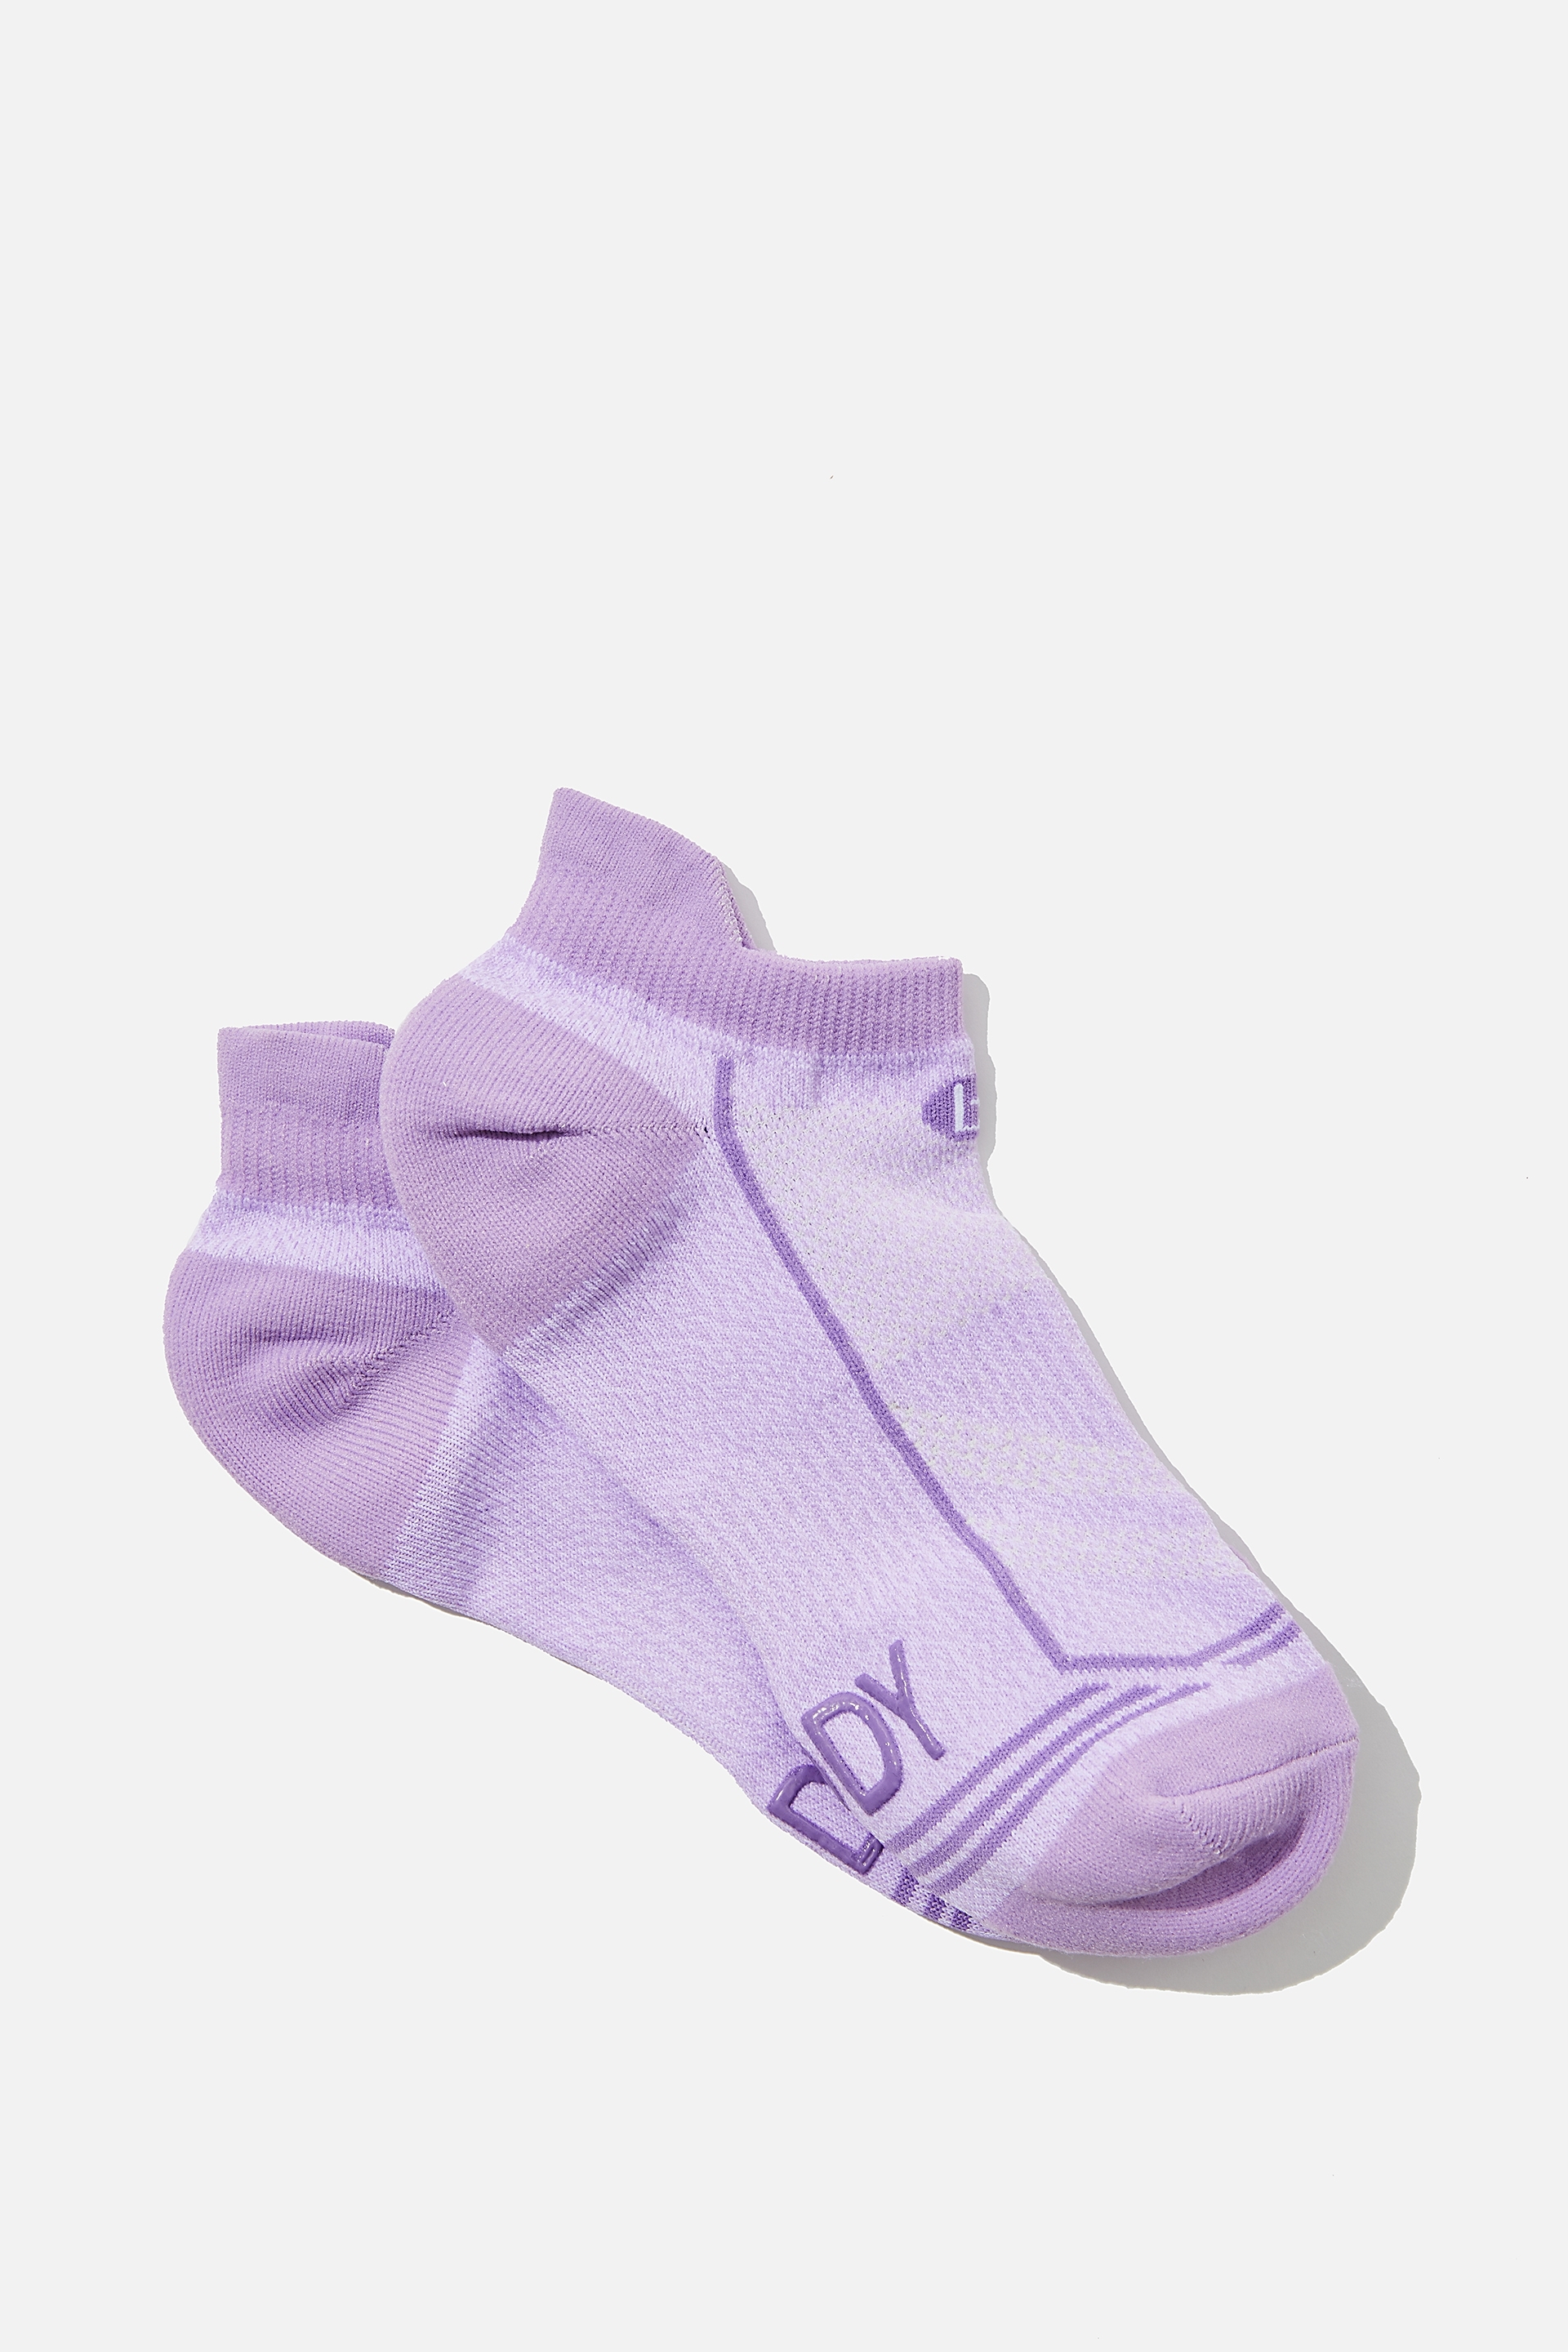 Body - Running Sock - Lilac gelato